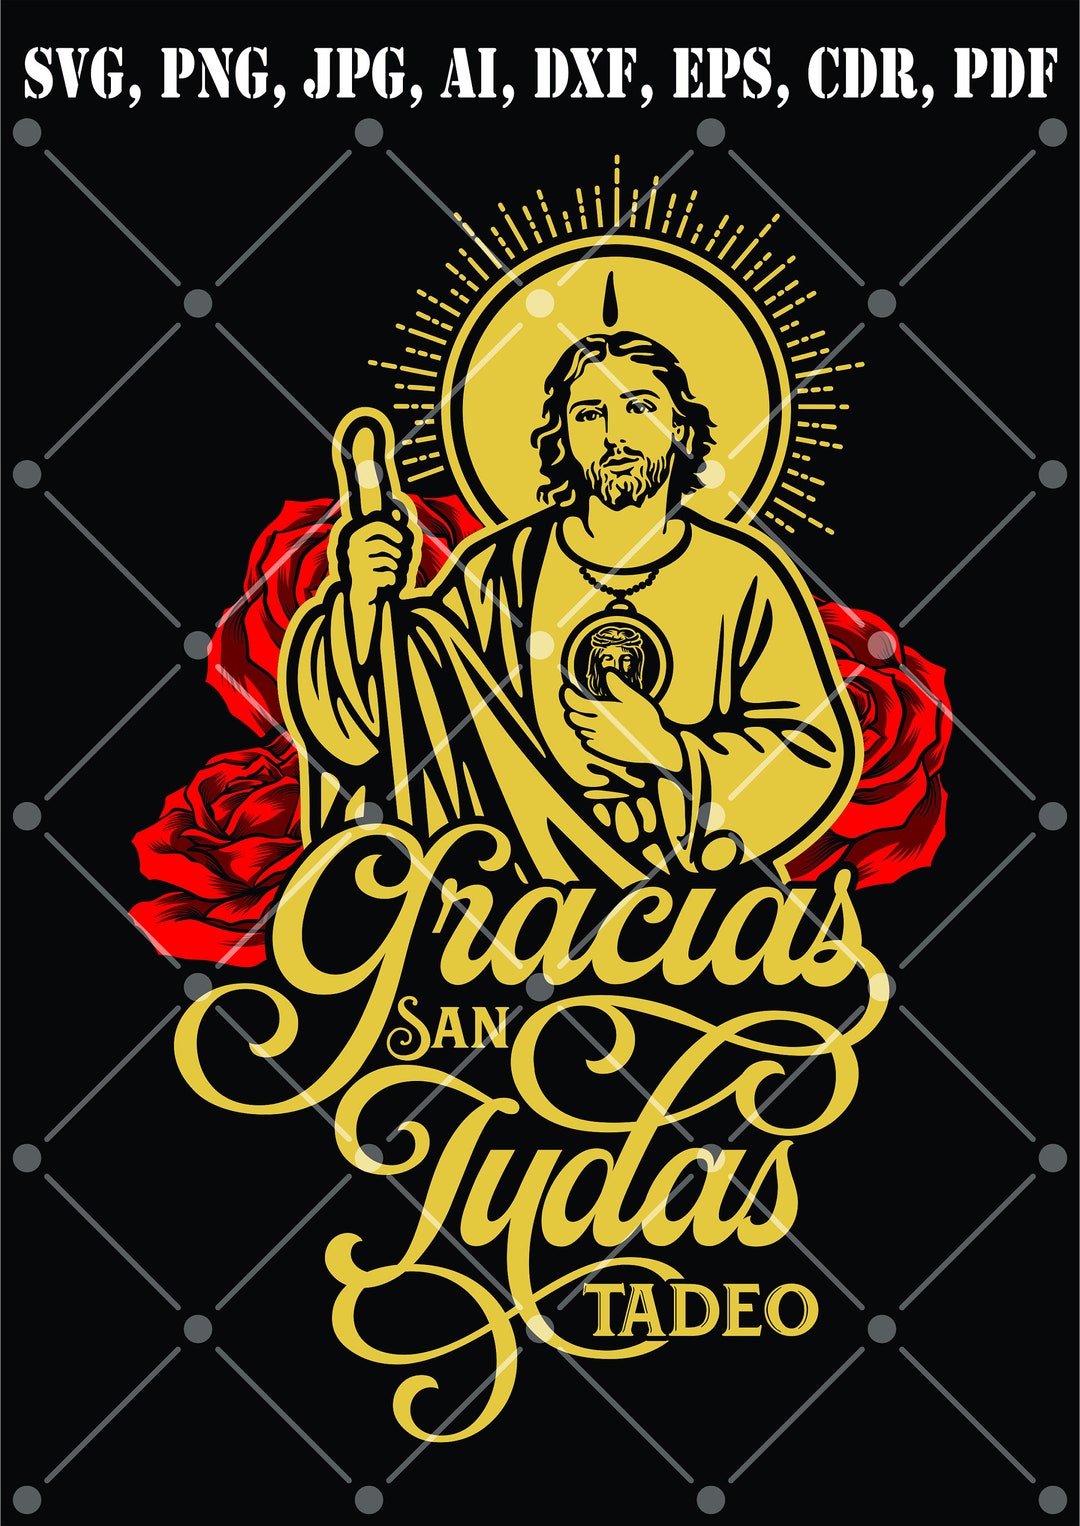 San Judas Tadeo / Digital Instant Download / Svg / Jpg / Png / Cdr / Ai /  Eps / Pdf / Dxf / Clipart / Cricut / Silhouette Cut Files 